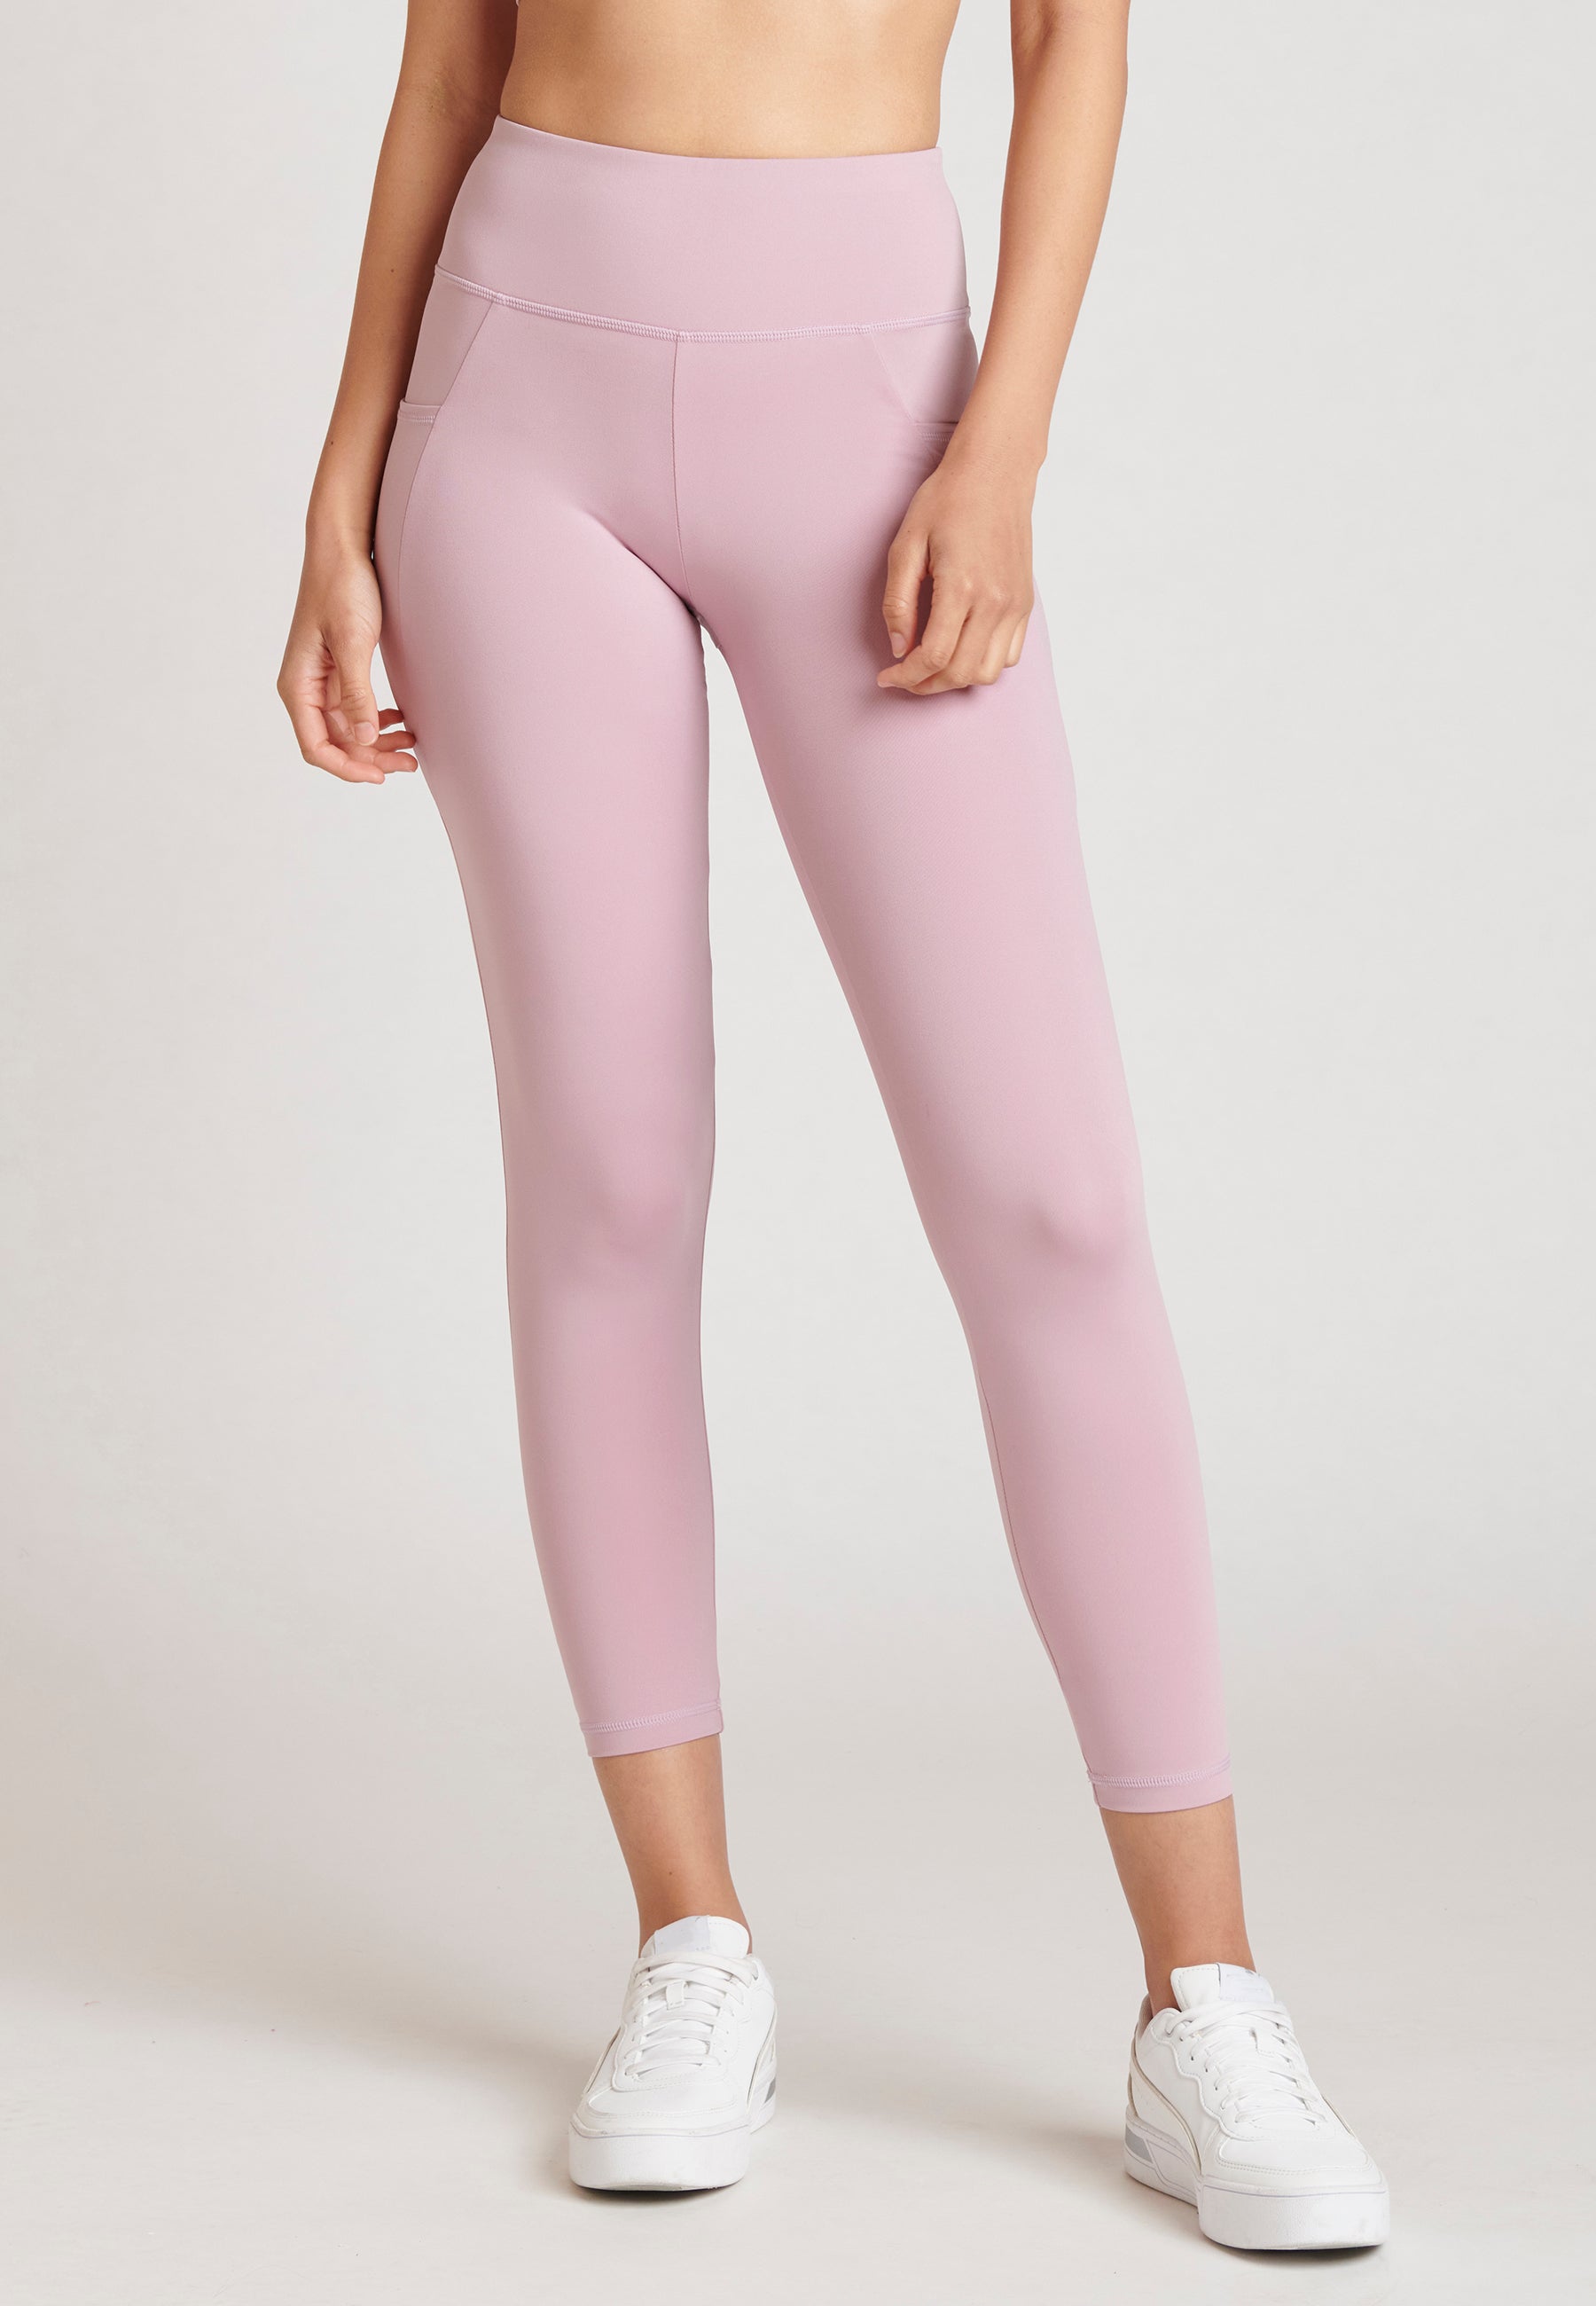 Buy Pink & Grey Leggings for Women by JOCKEY Online